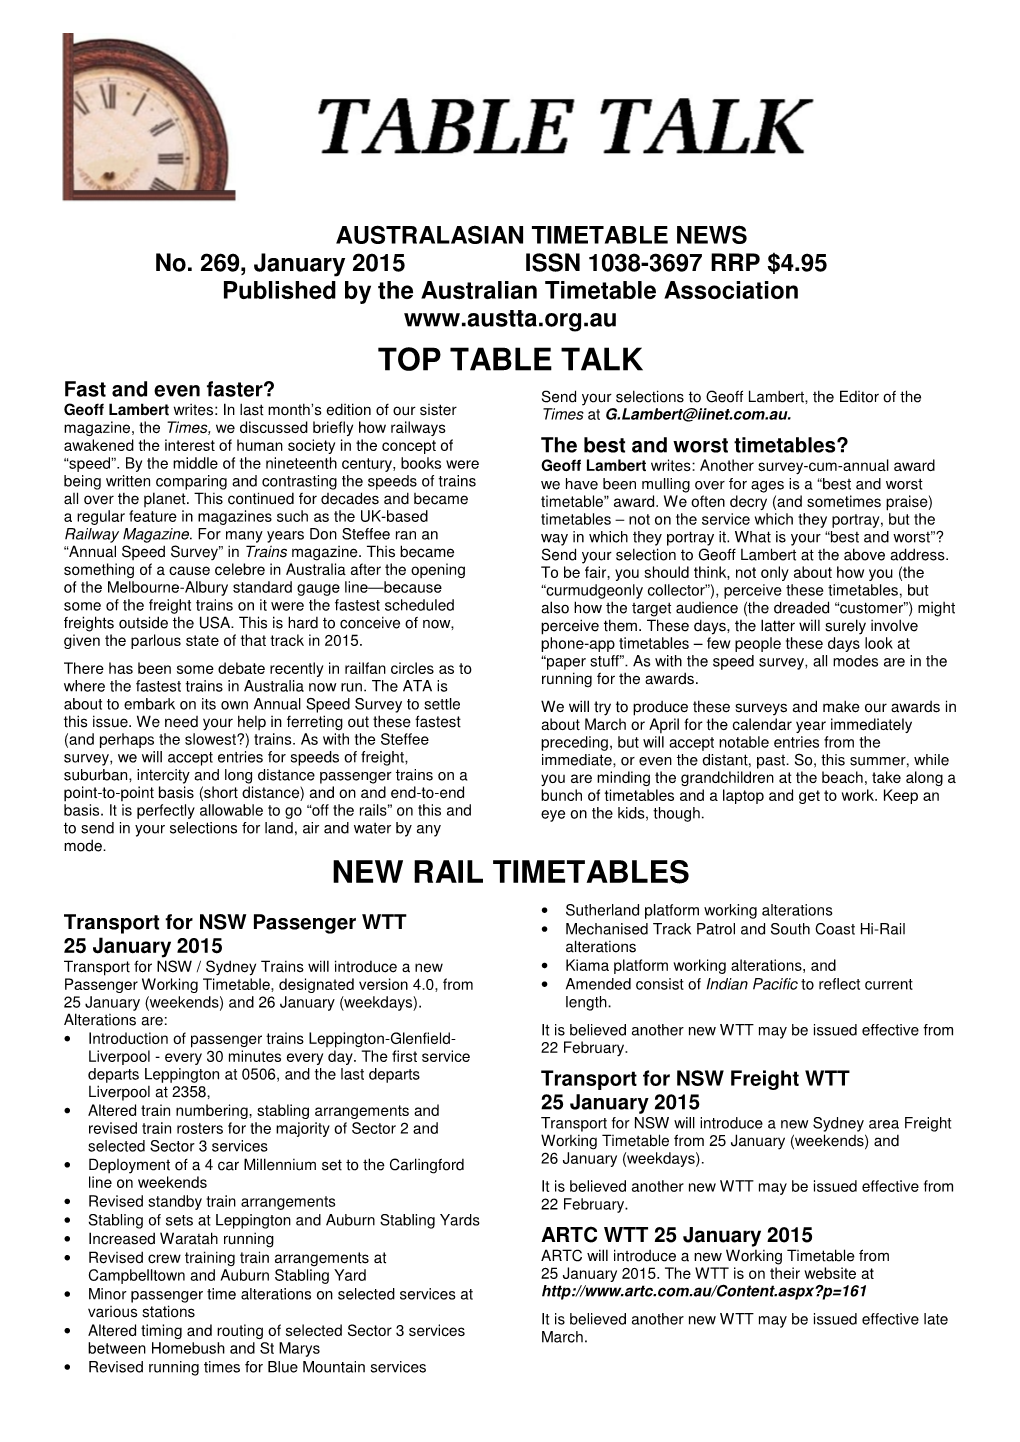 Top Table Talk New Rail Timetables